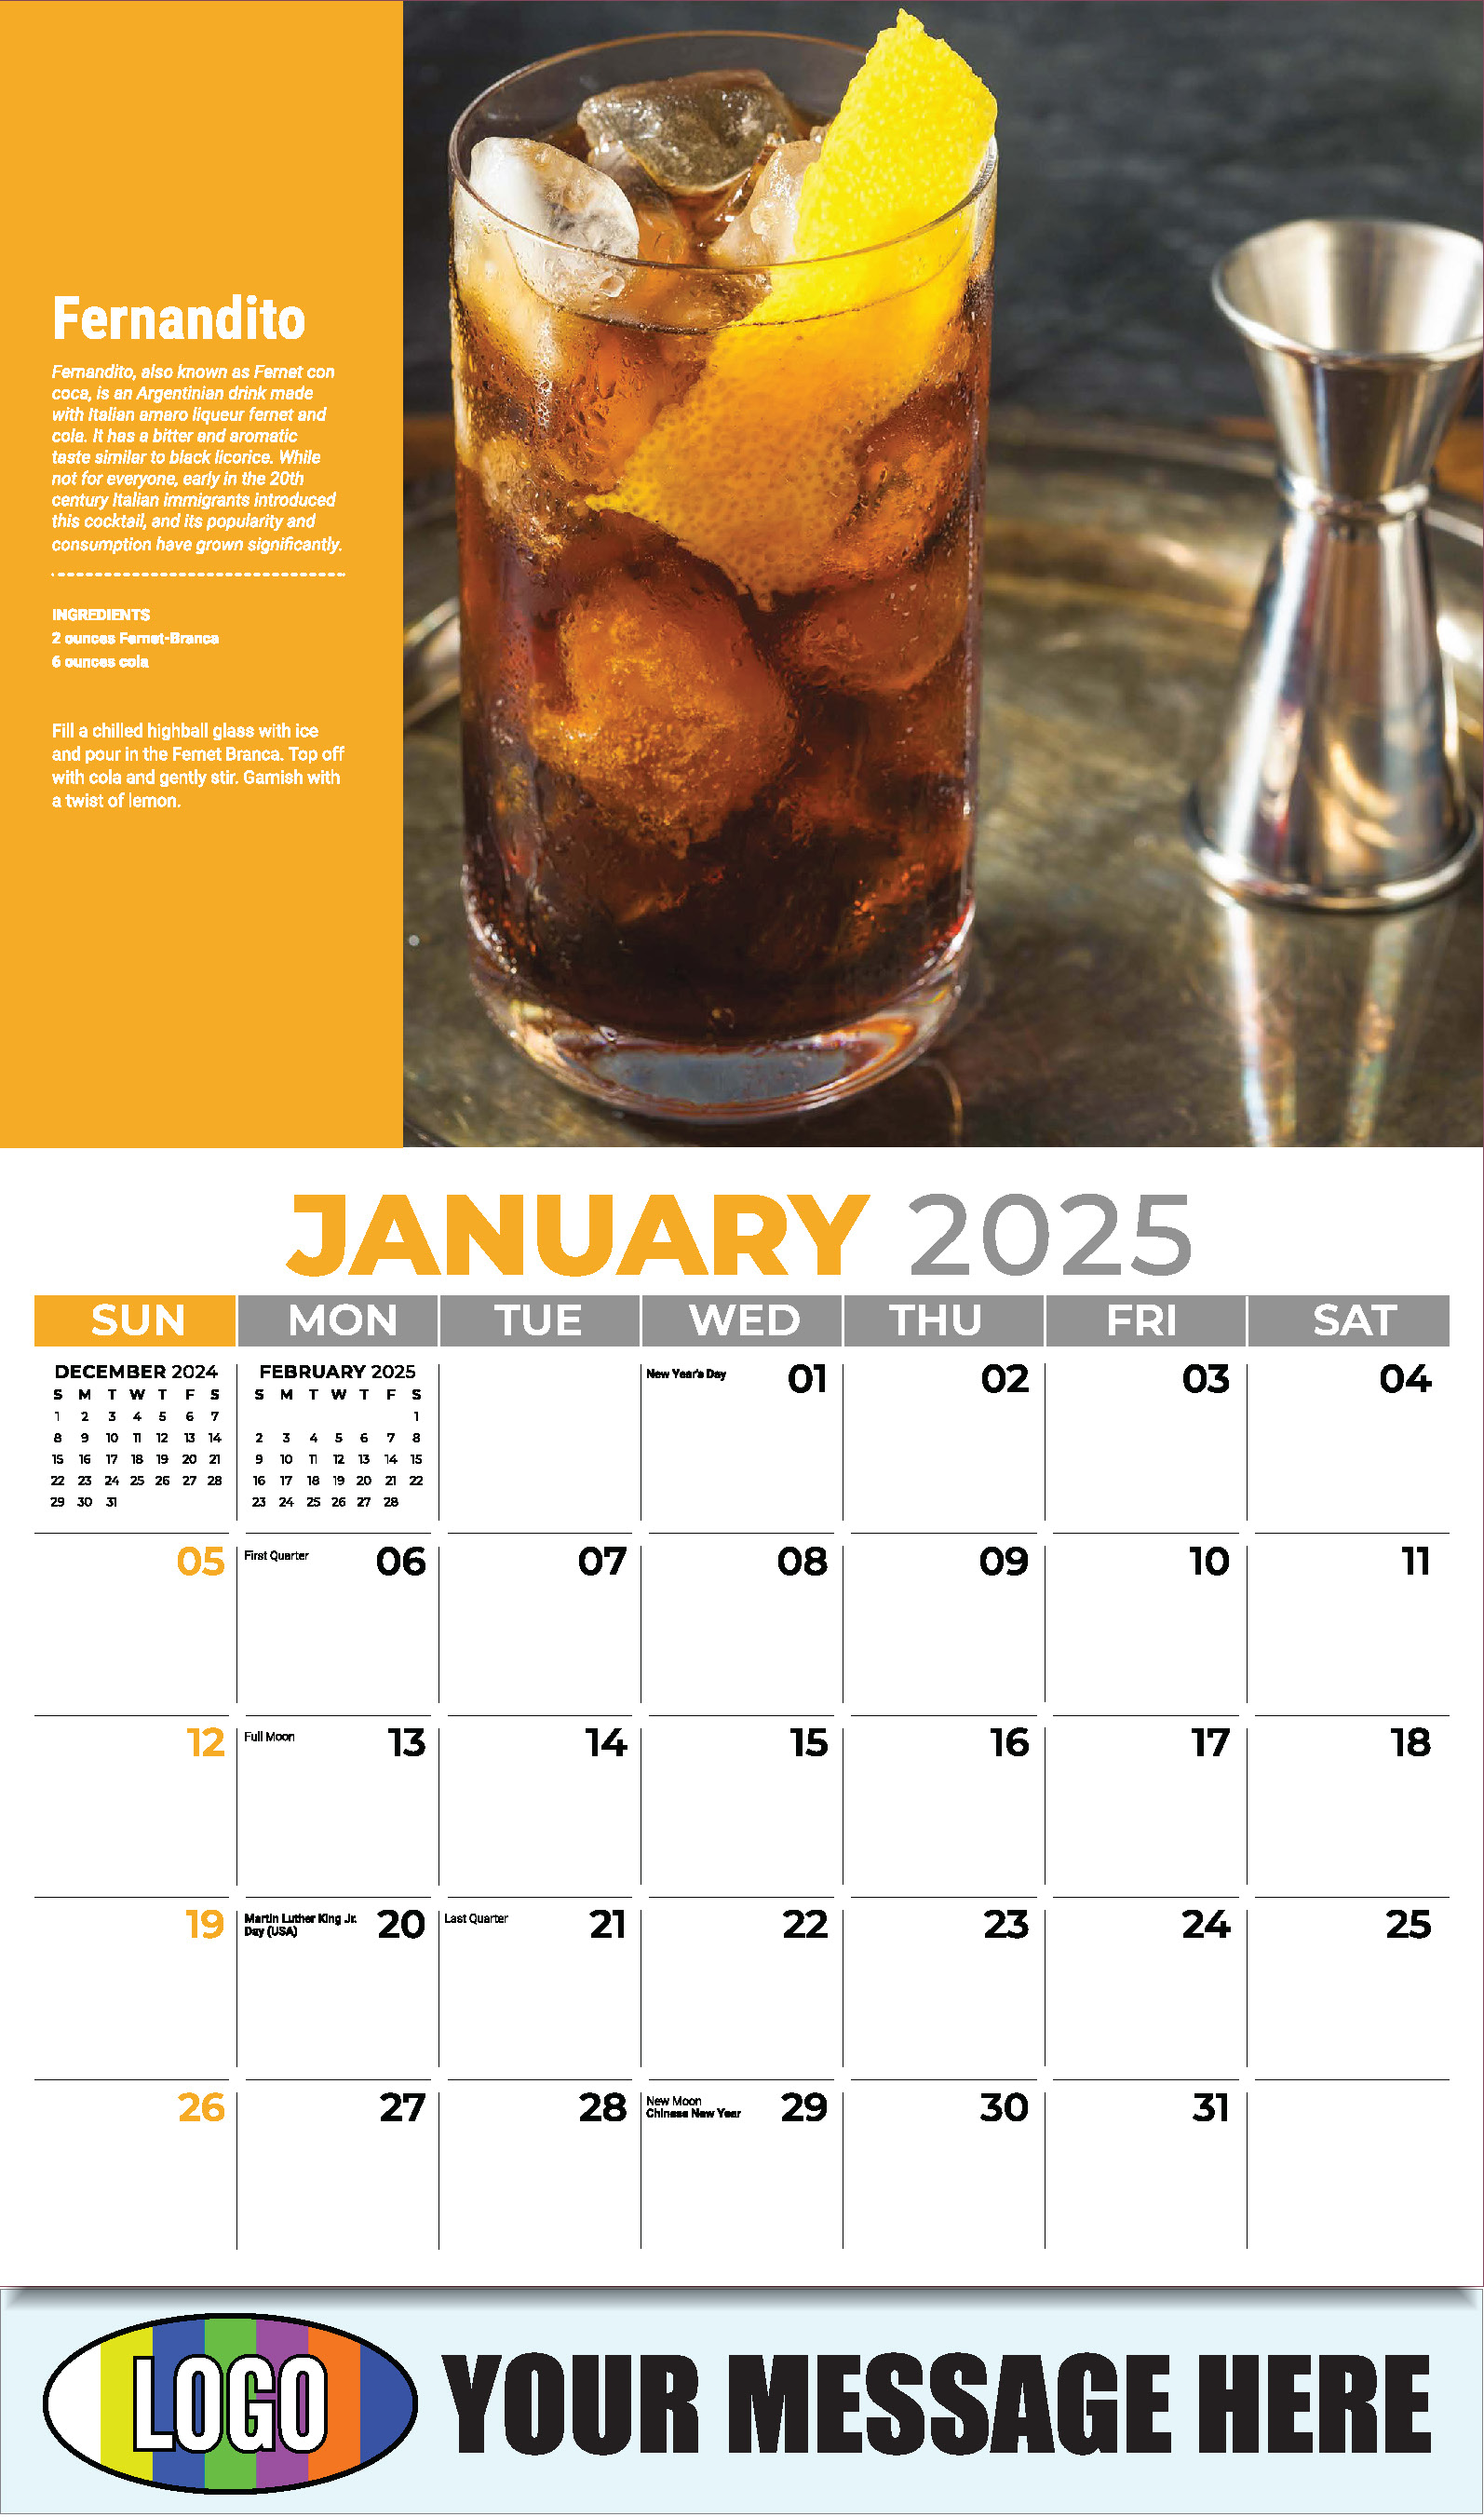 Happy Hour Cocktails 2025 Business Promotional Calendar - January